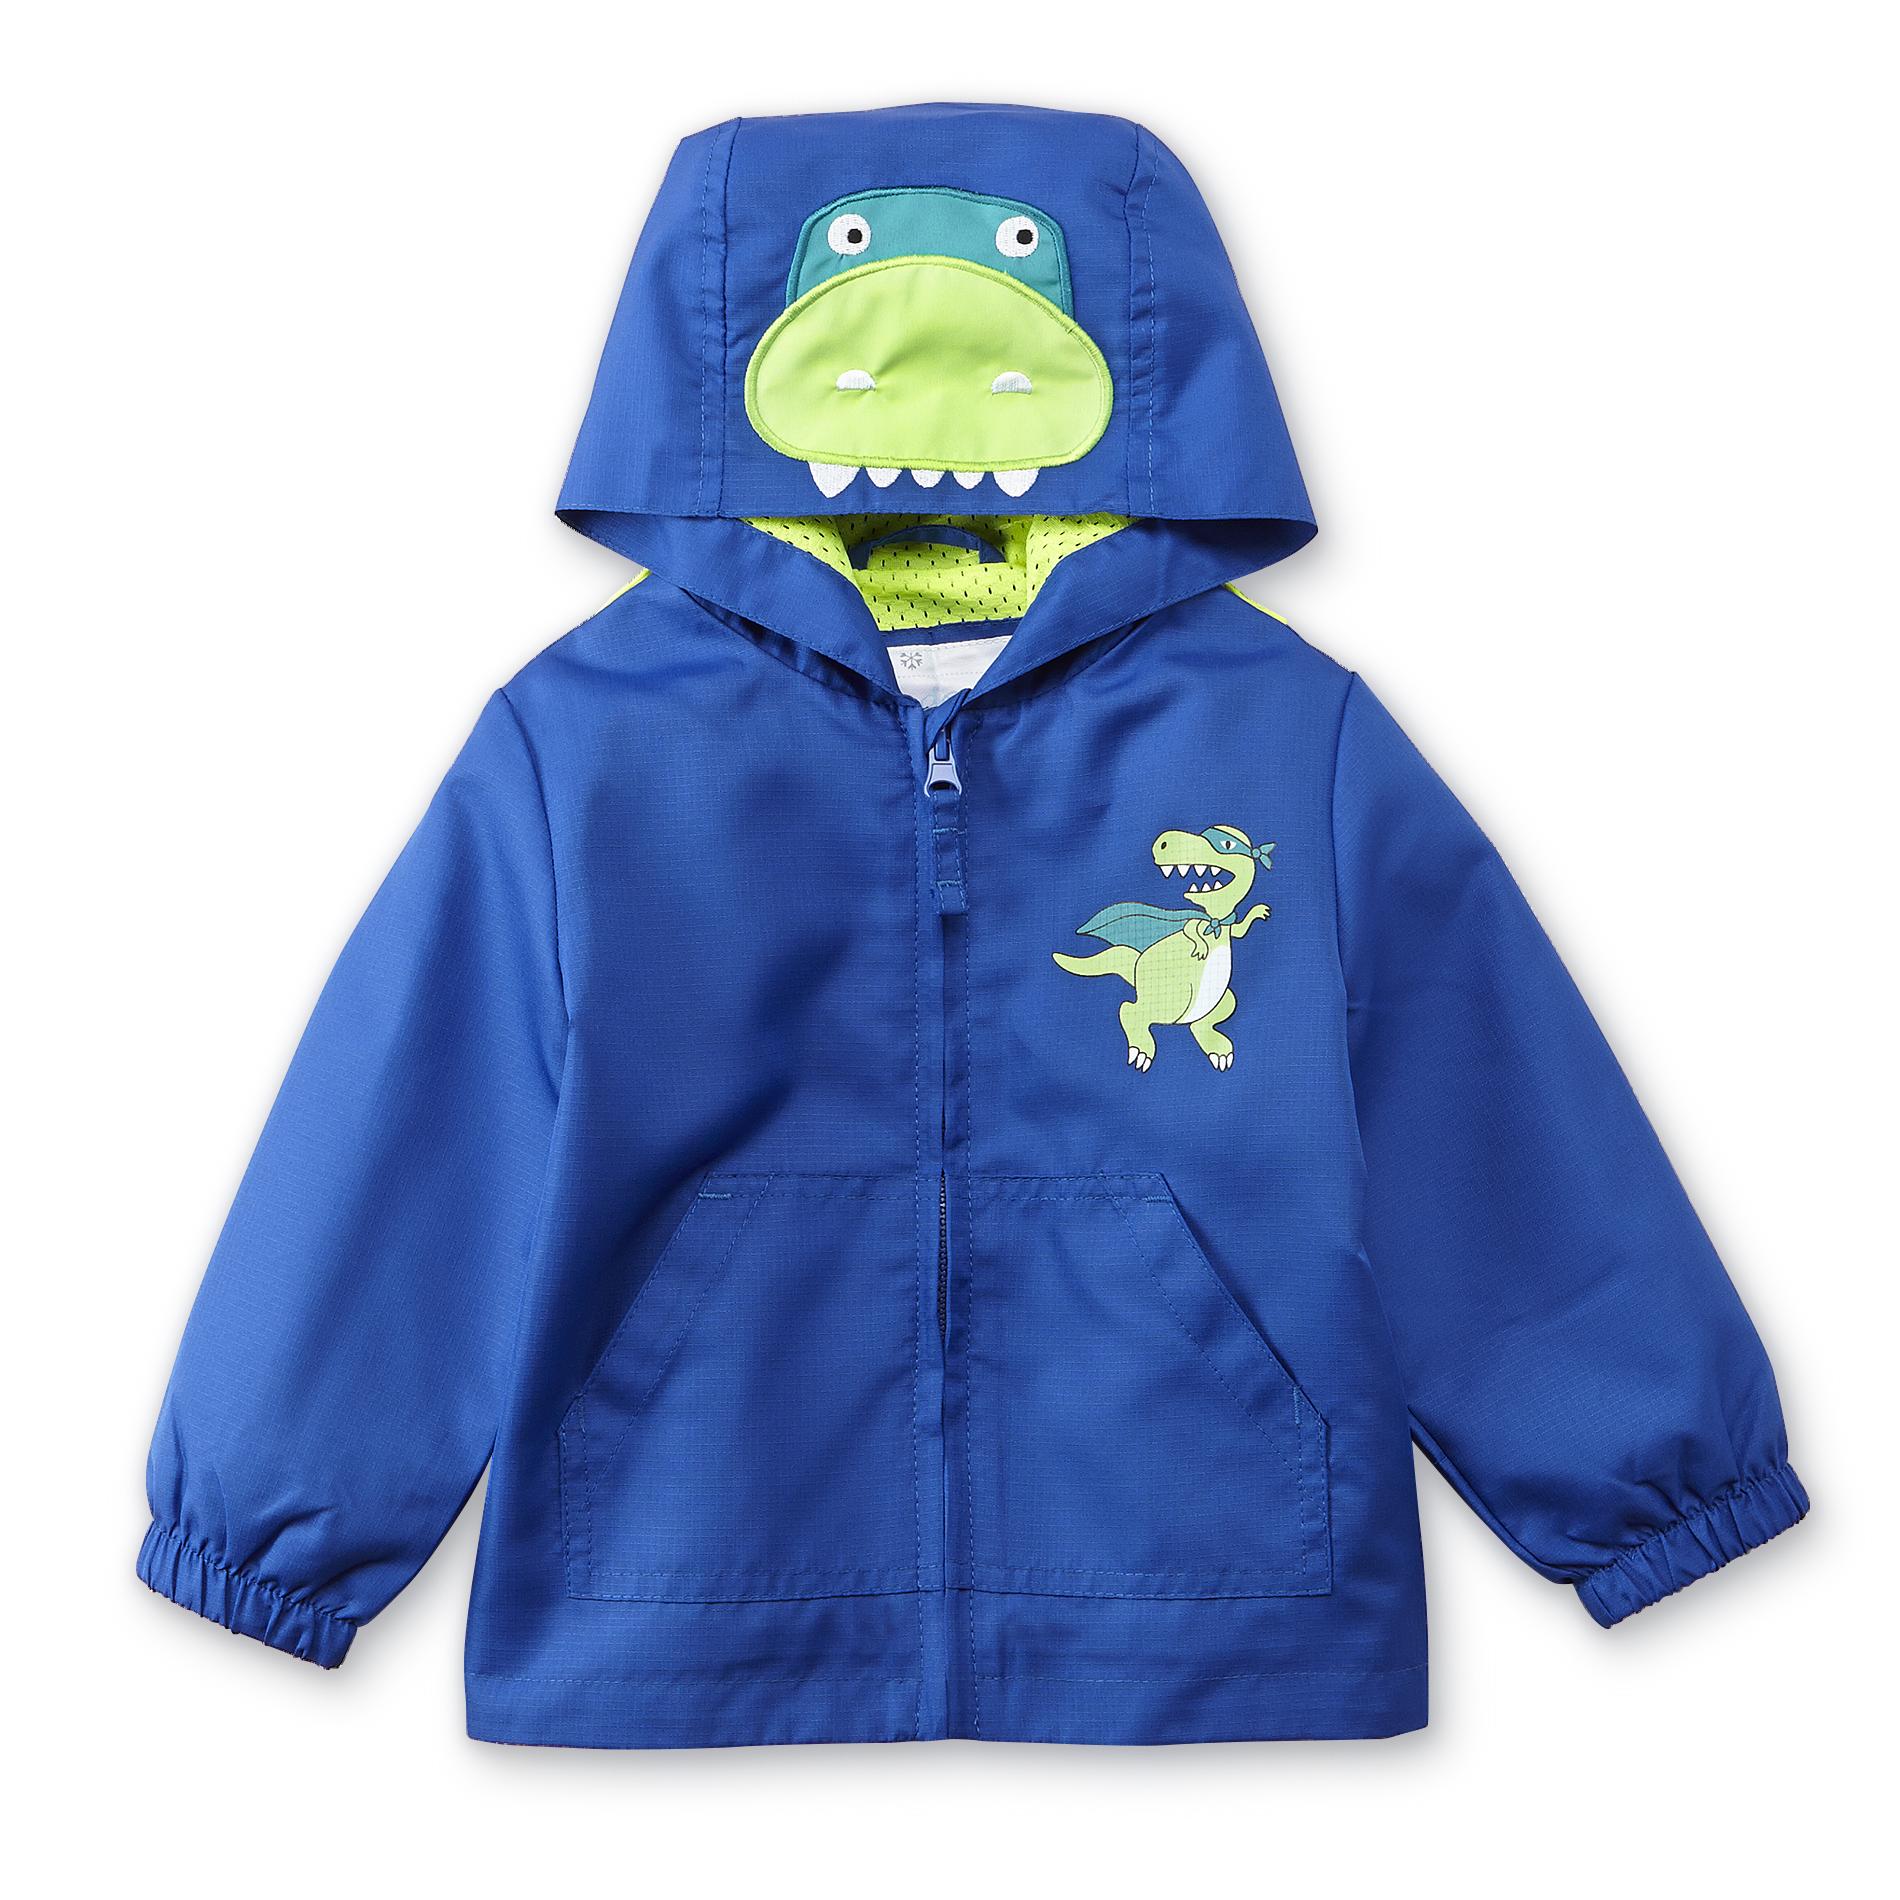 WonderKids Infant & Toddler Boy's Superhero Windbreaker Jacket - Dinosaur